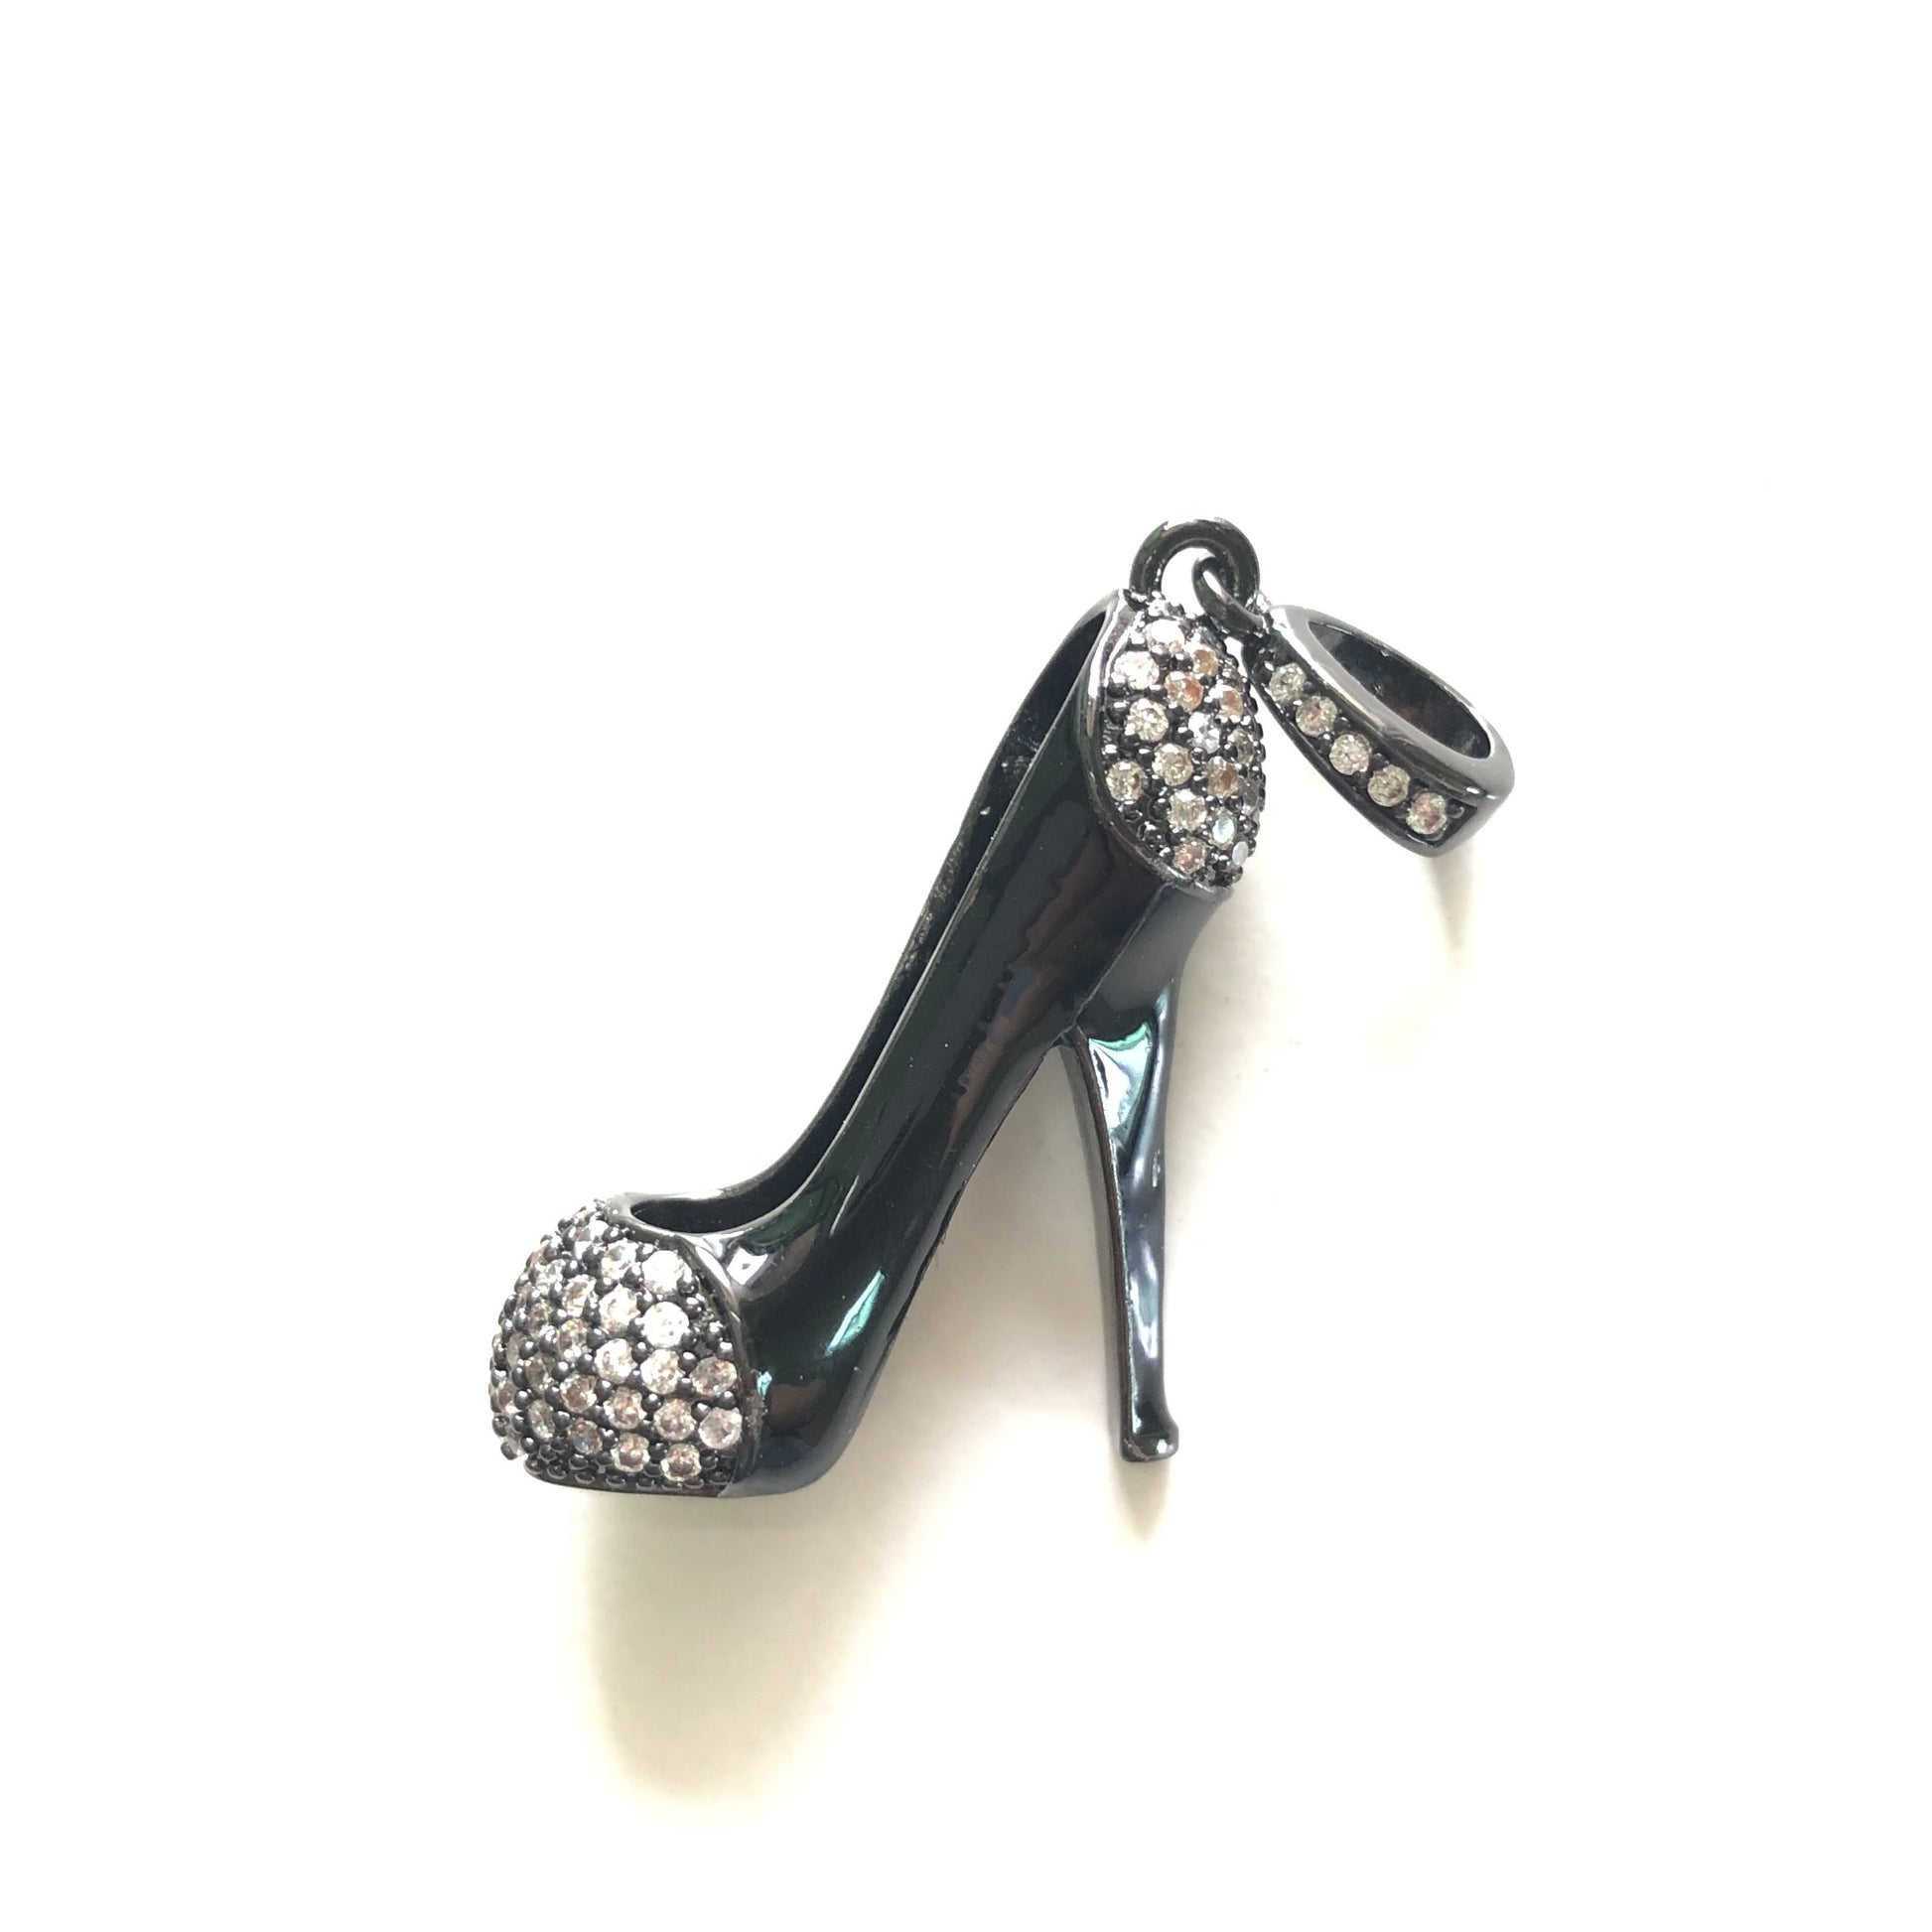 10pcs/lot 30*26mm CZ Paved Black High Heel Shoe Charms Black CZ Paved Charms High Heels On Sale Charms Beads Beyond